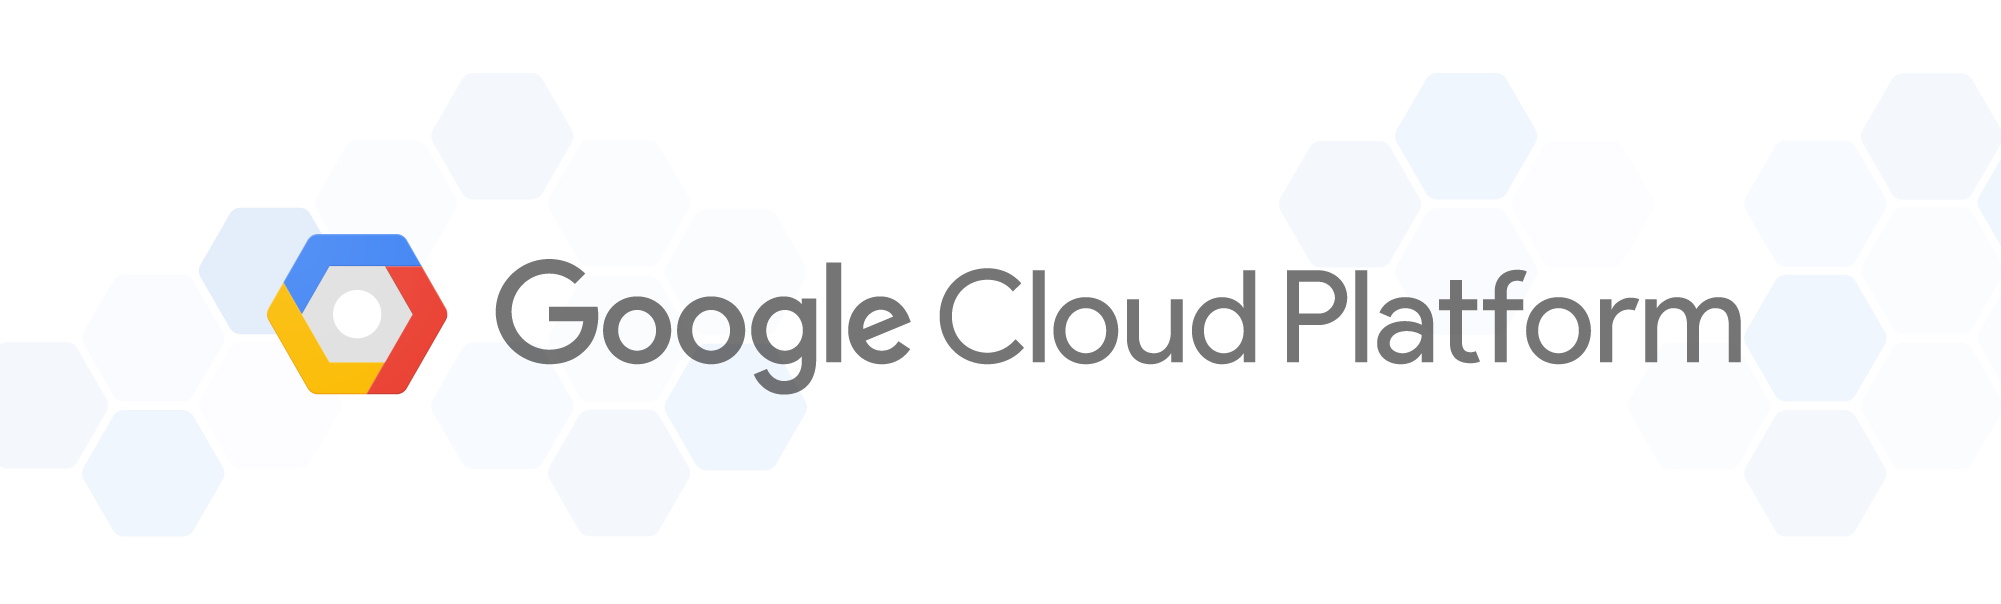 Google Cloud Platform — Paul Gifford - Google Cloud, Transparent background PNG HD thumbnail